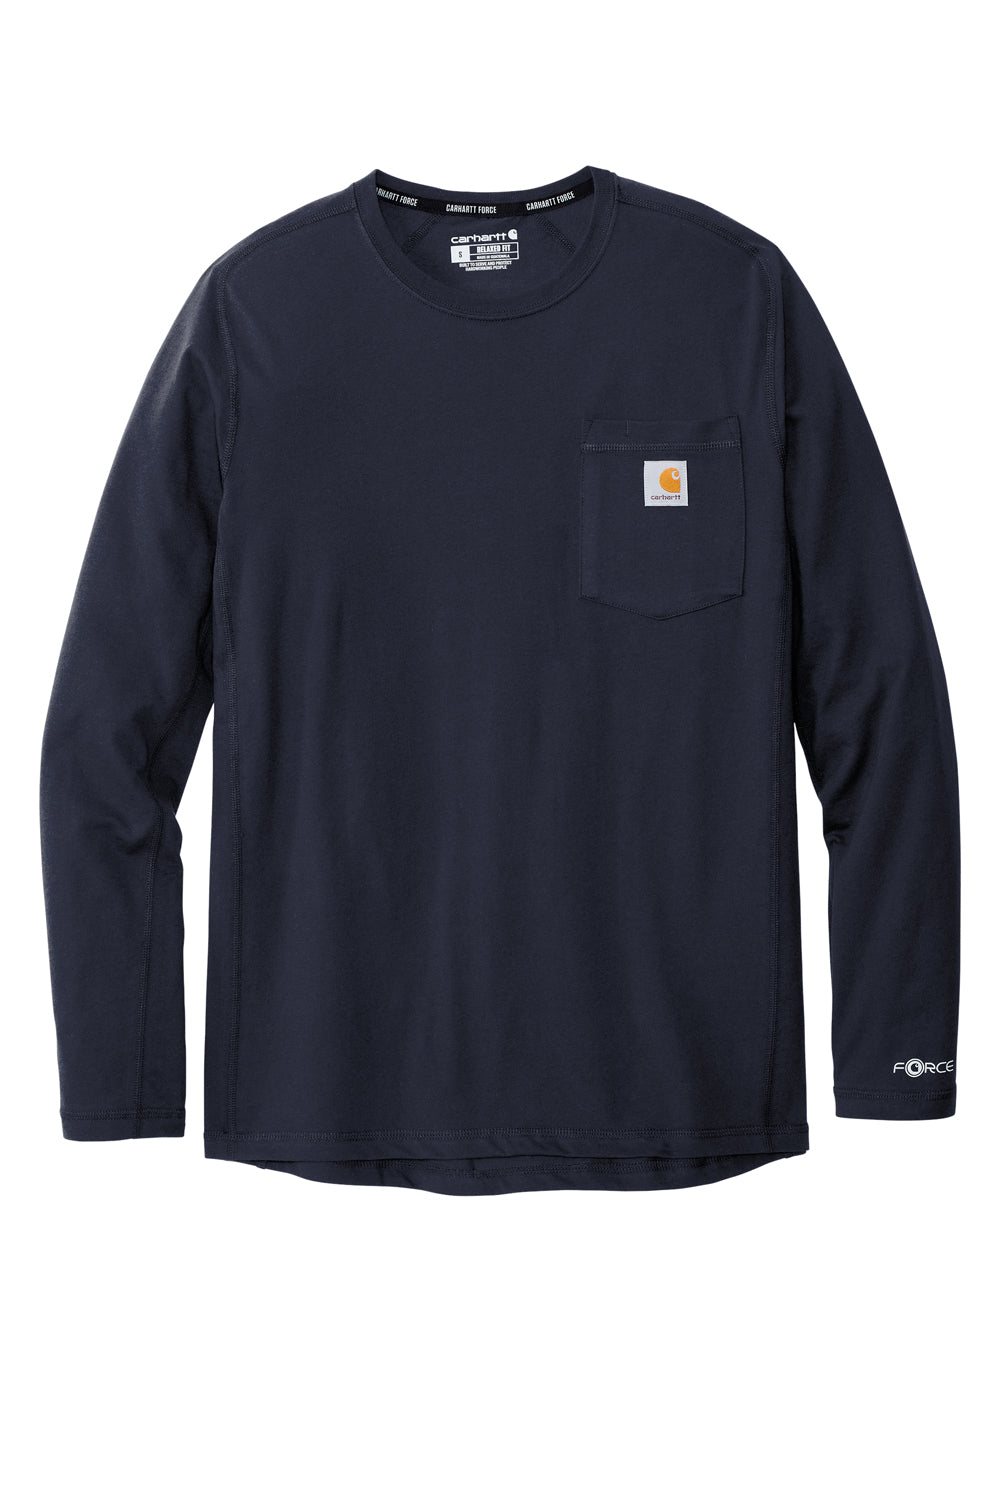 Carhartt CT104617 Mens Force Moisture Wicking Long Sleeve Crewneck T-Shirt w/ Pocket Navy Blue Flat Front